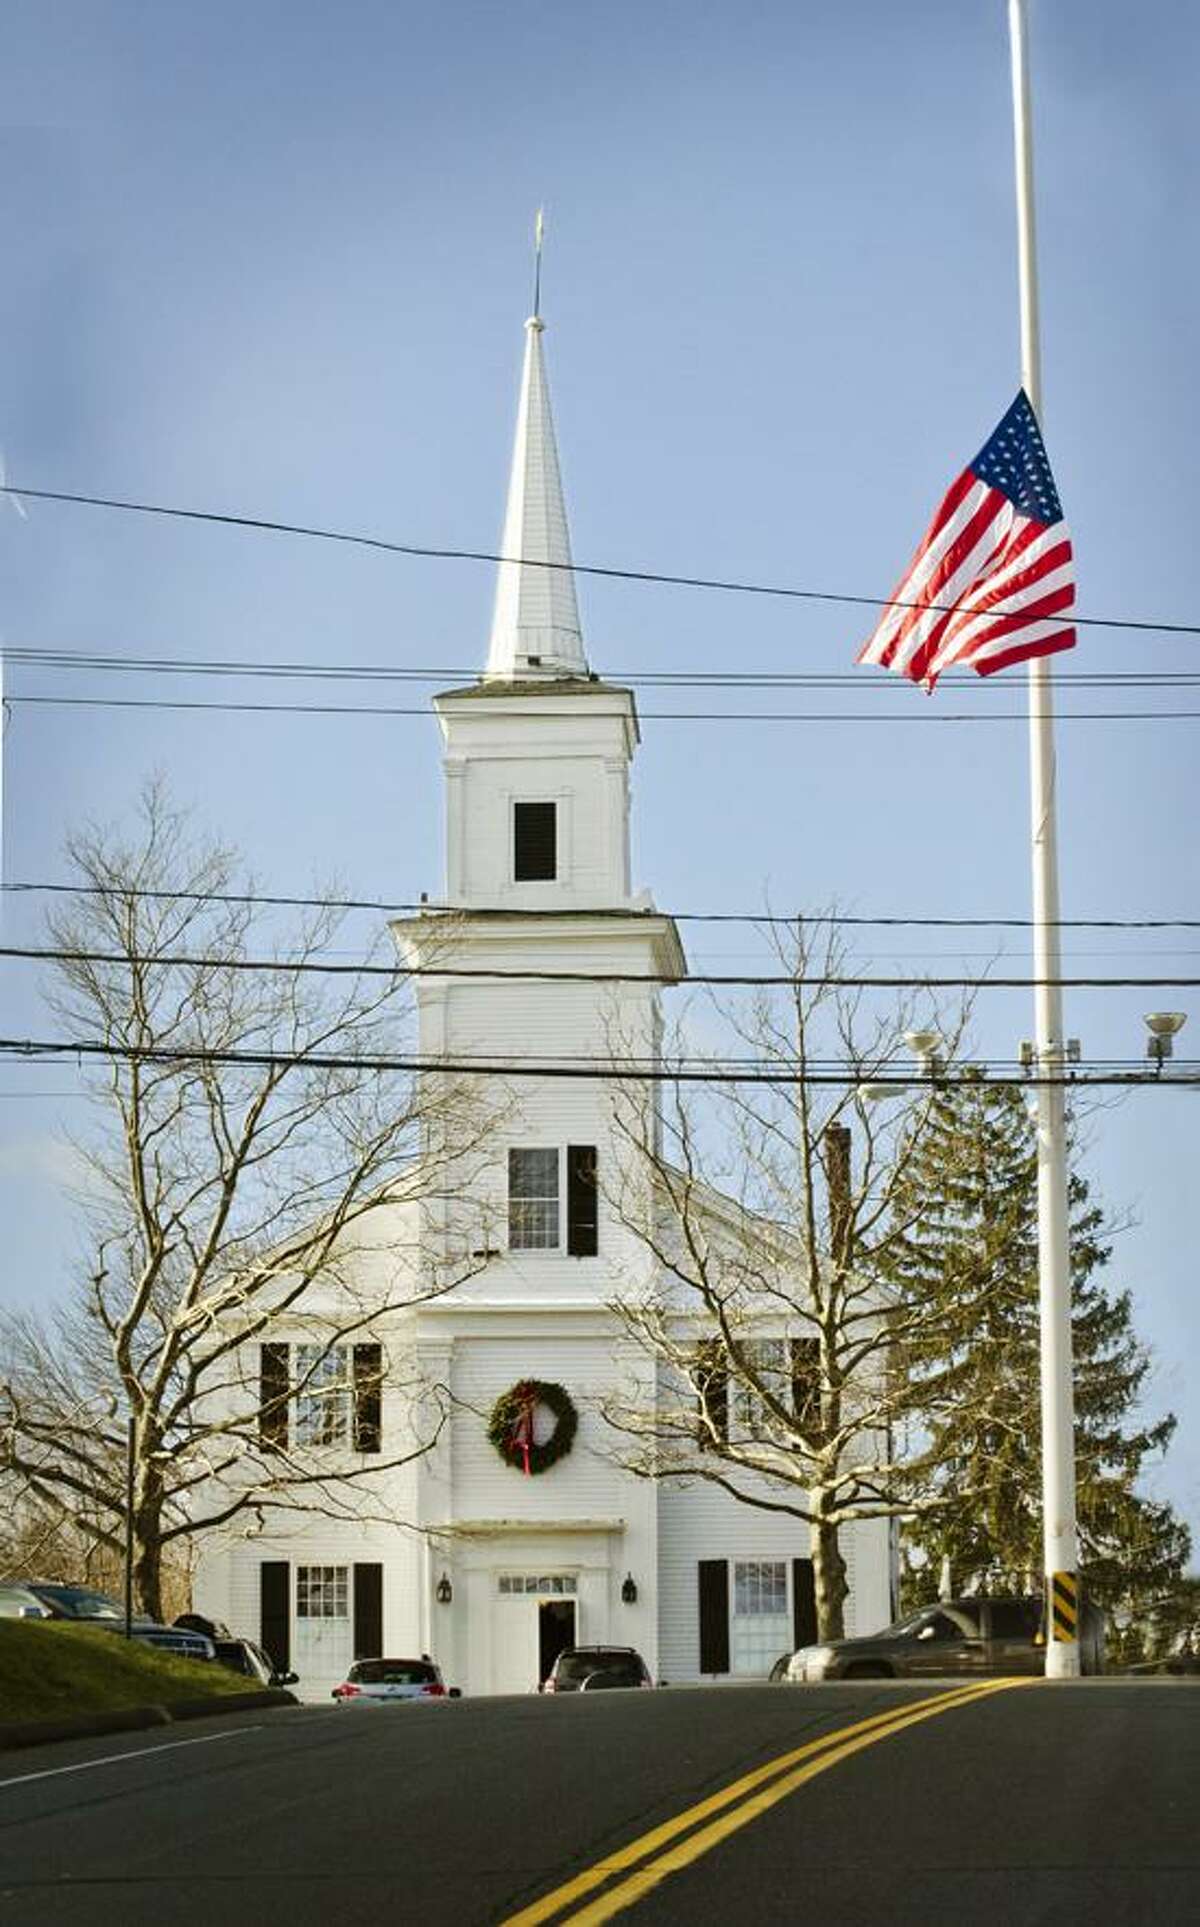 The American flag flies at half mast near the Community Meeting House church. Melanie Stengel/Register